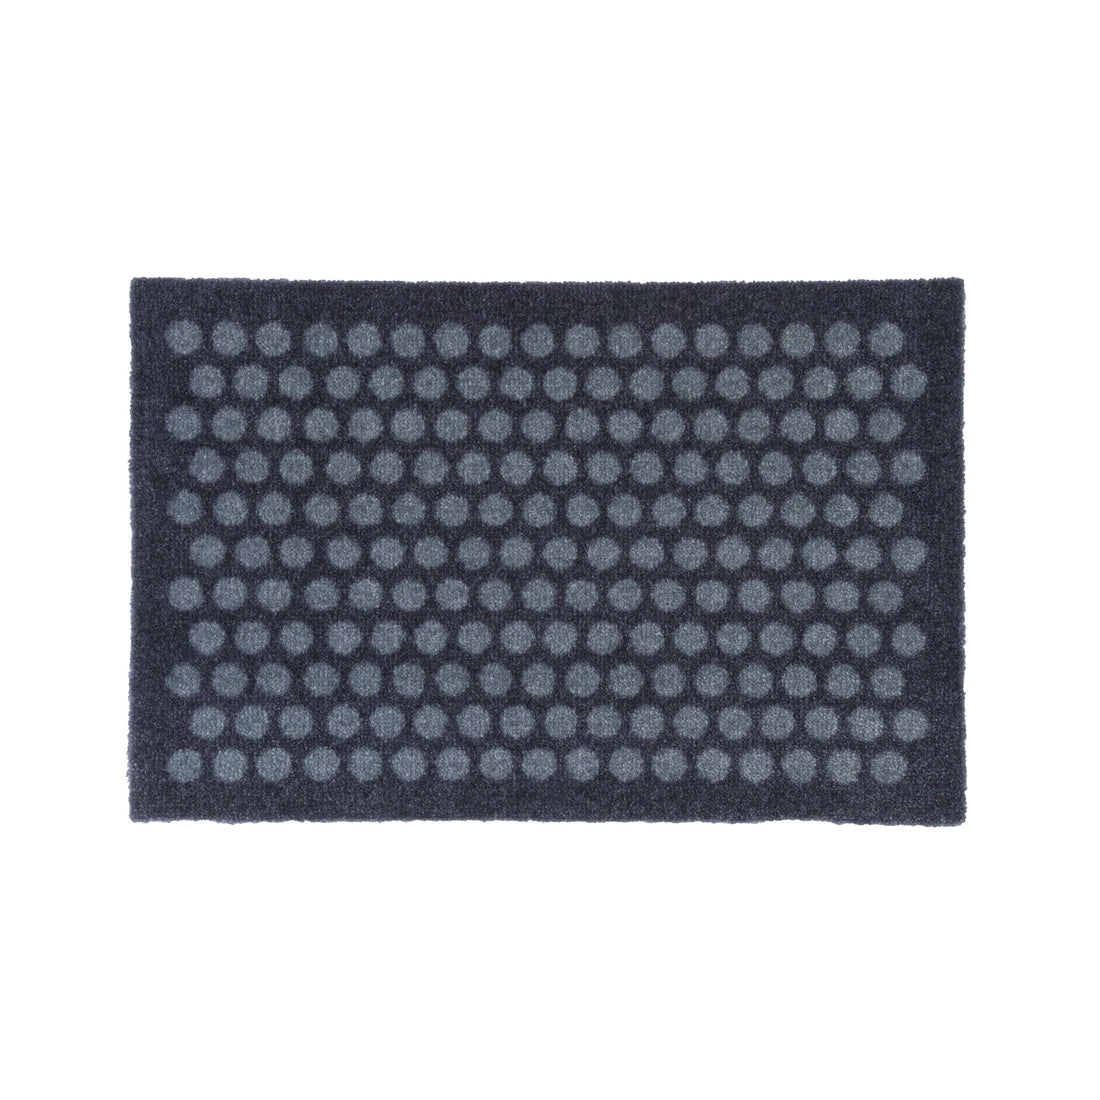 Floor mat 40 x 60 cm - dots/gray